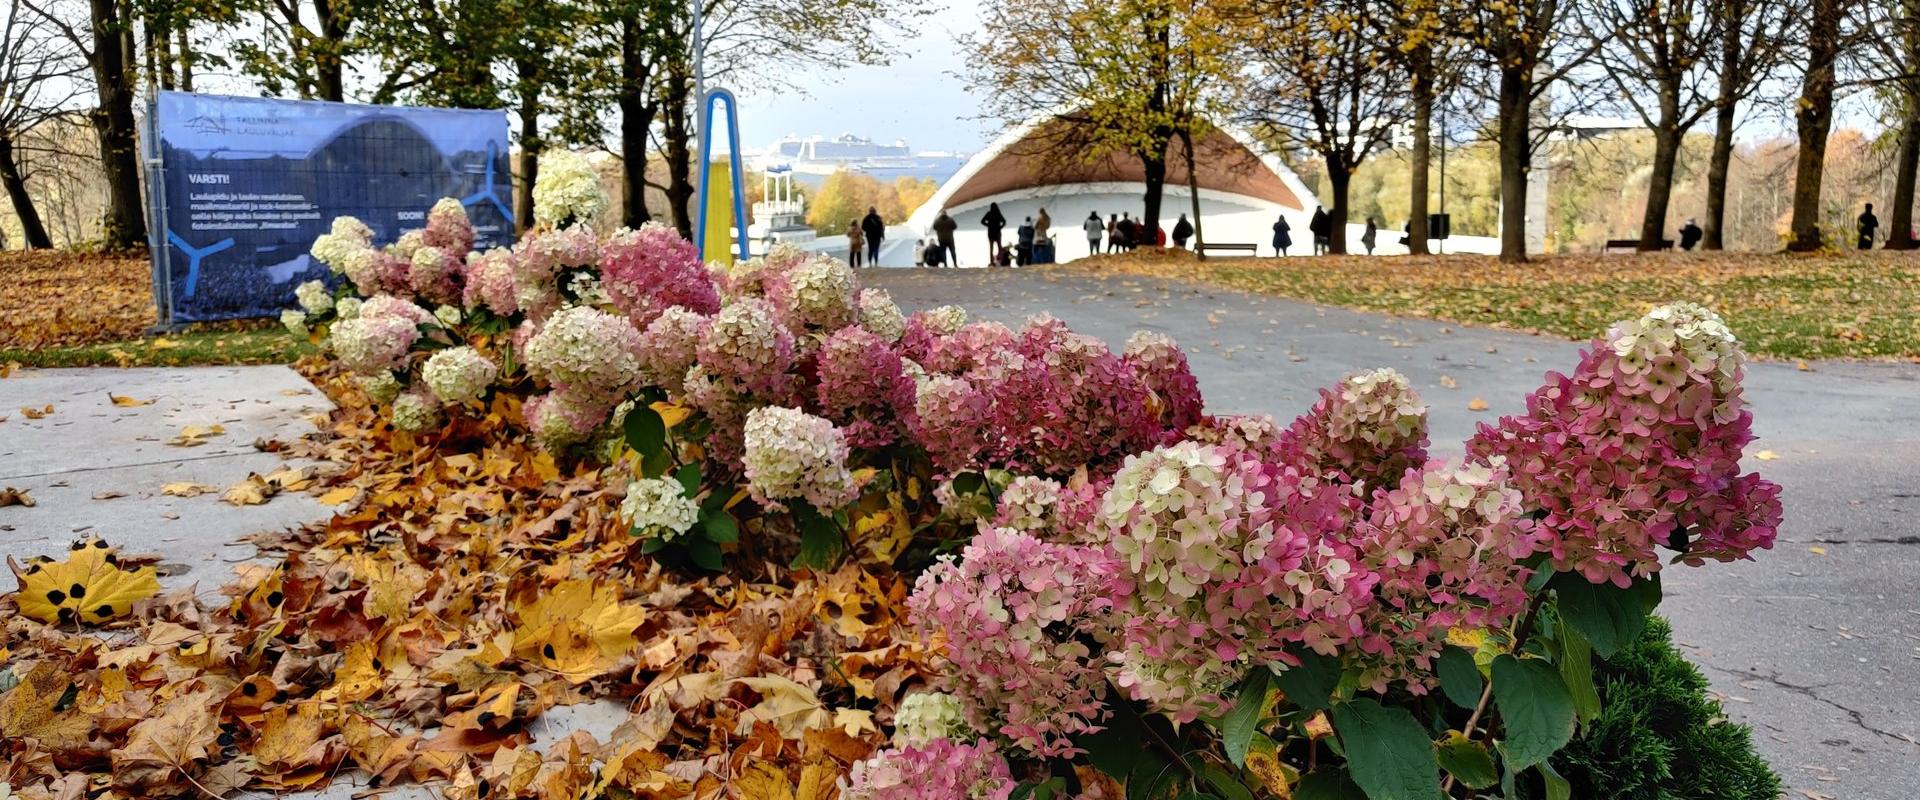 Tallinn Song Festival Grounds Park